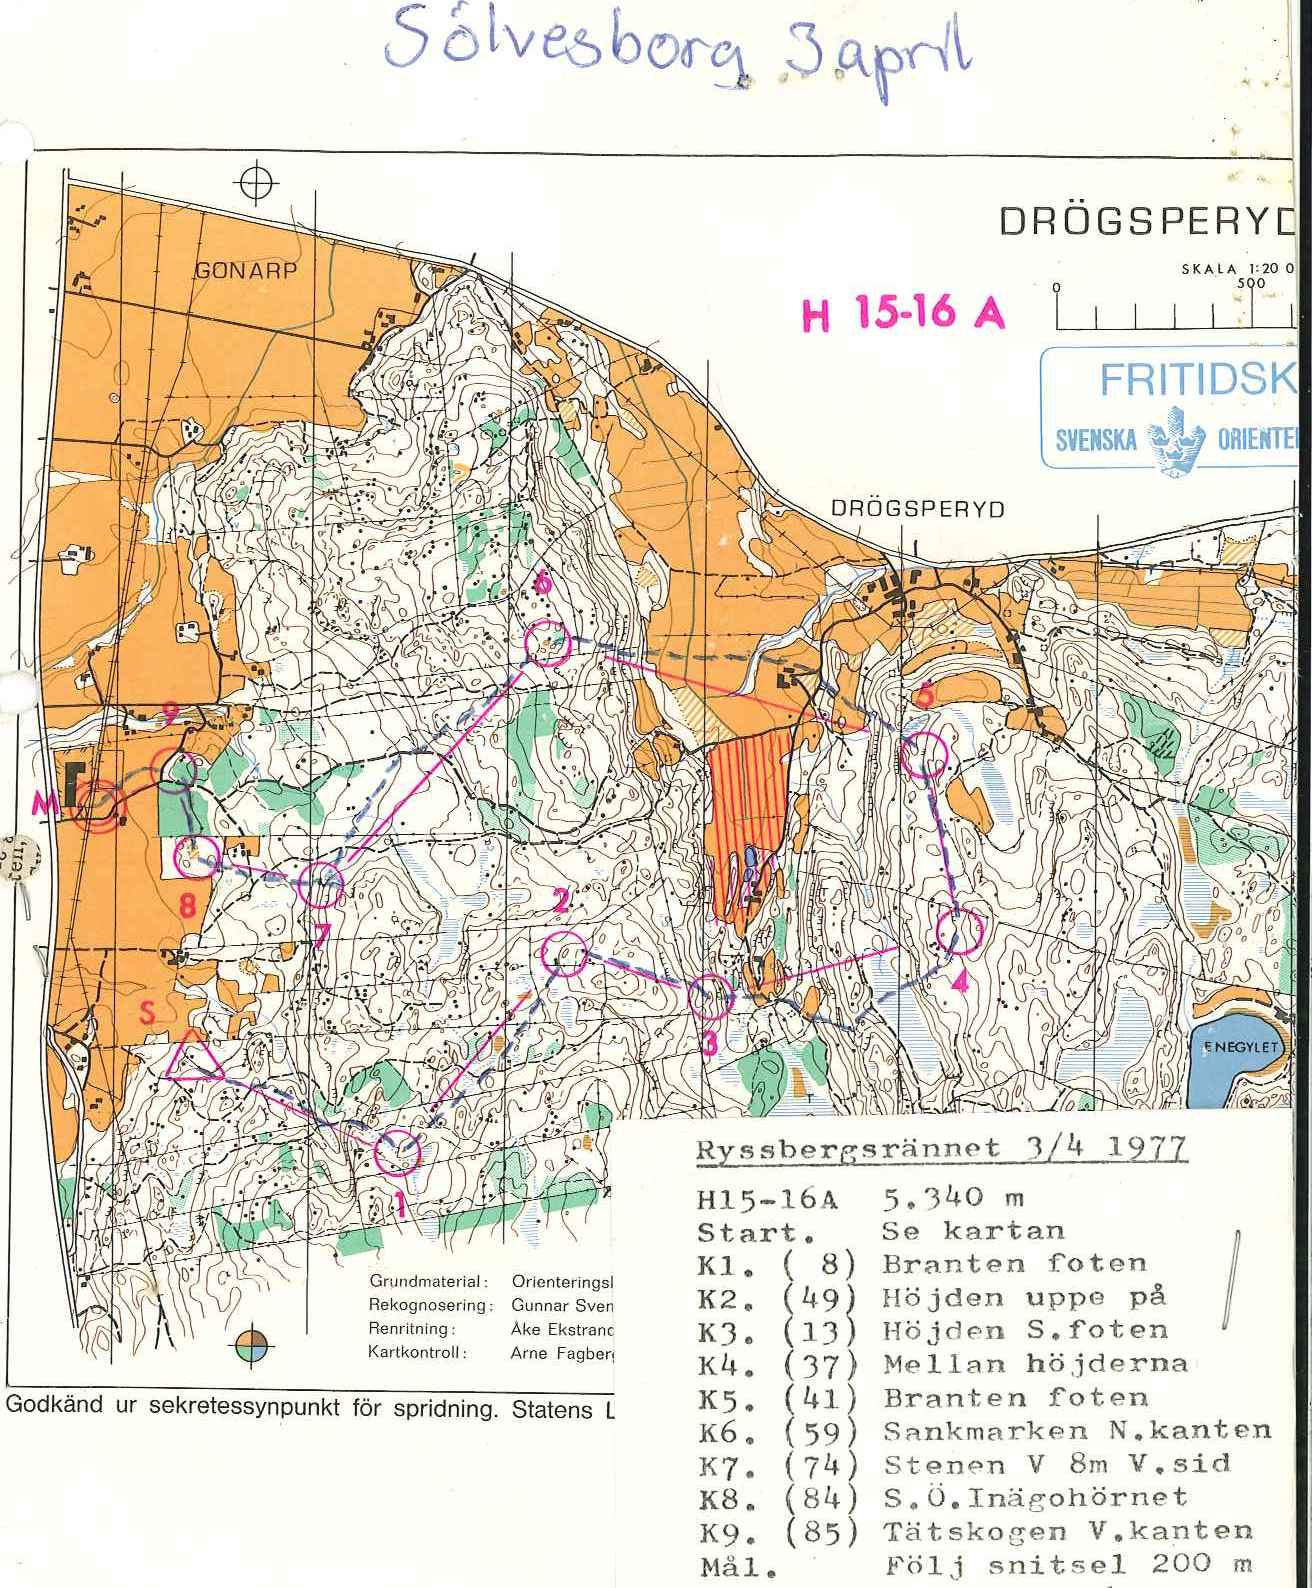 Sölvesborg (02-04-1977)